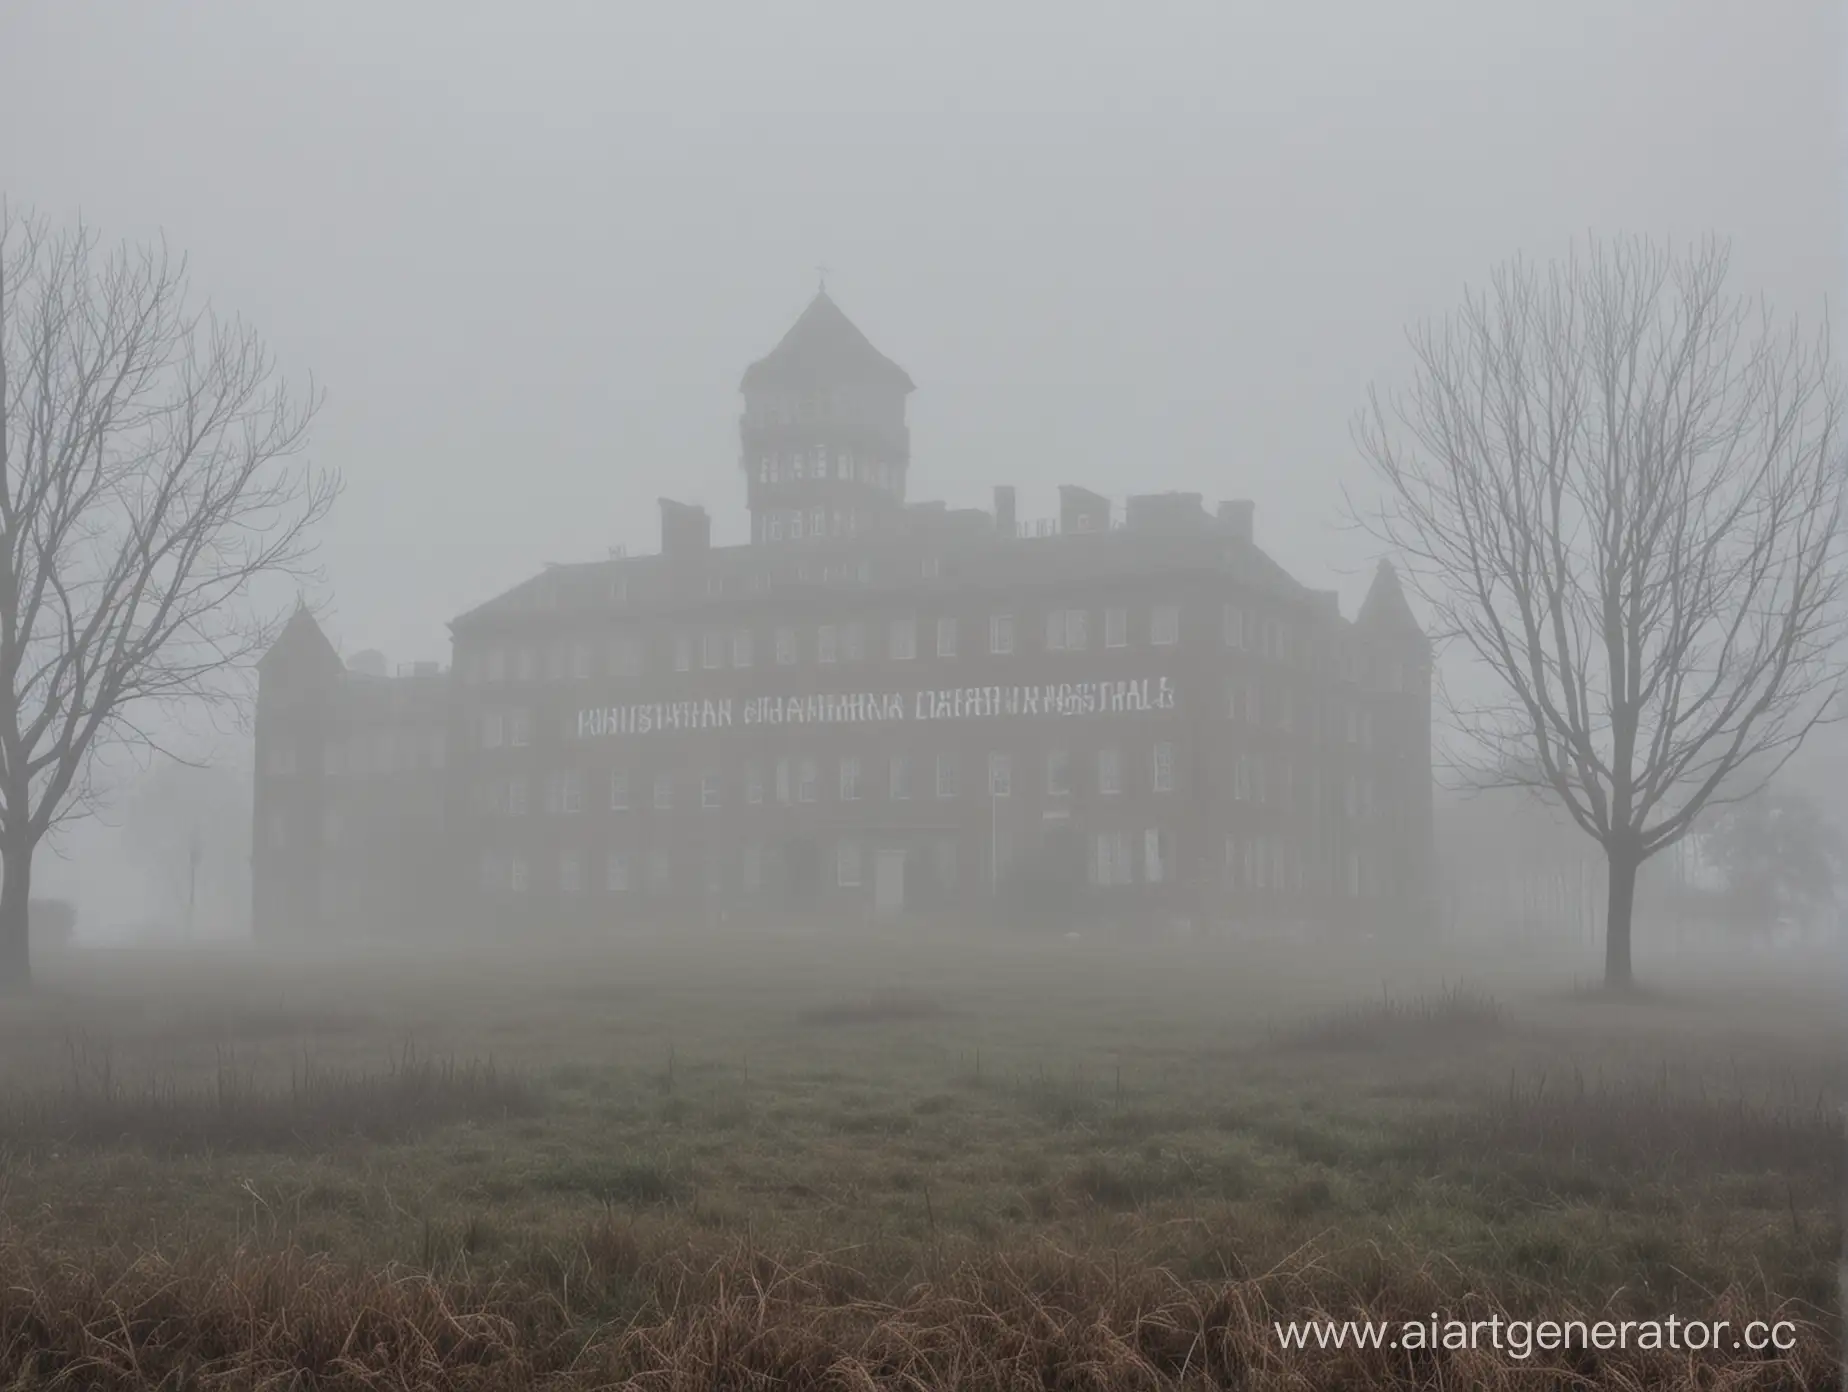 Eerie-Mental-Hospital-Building-Emerges-Through-Dense-Fog